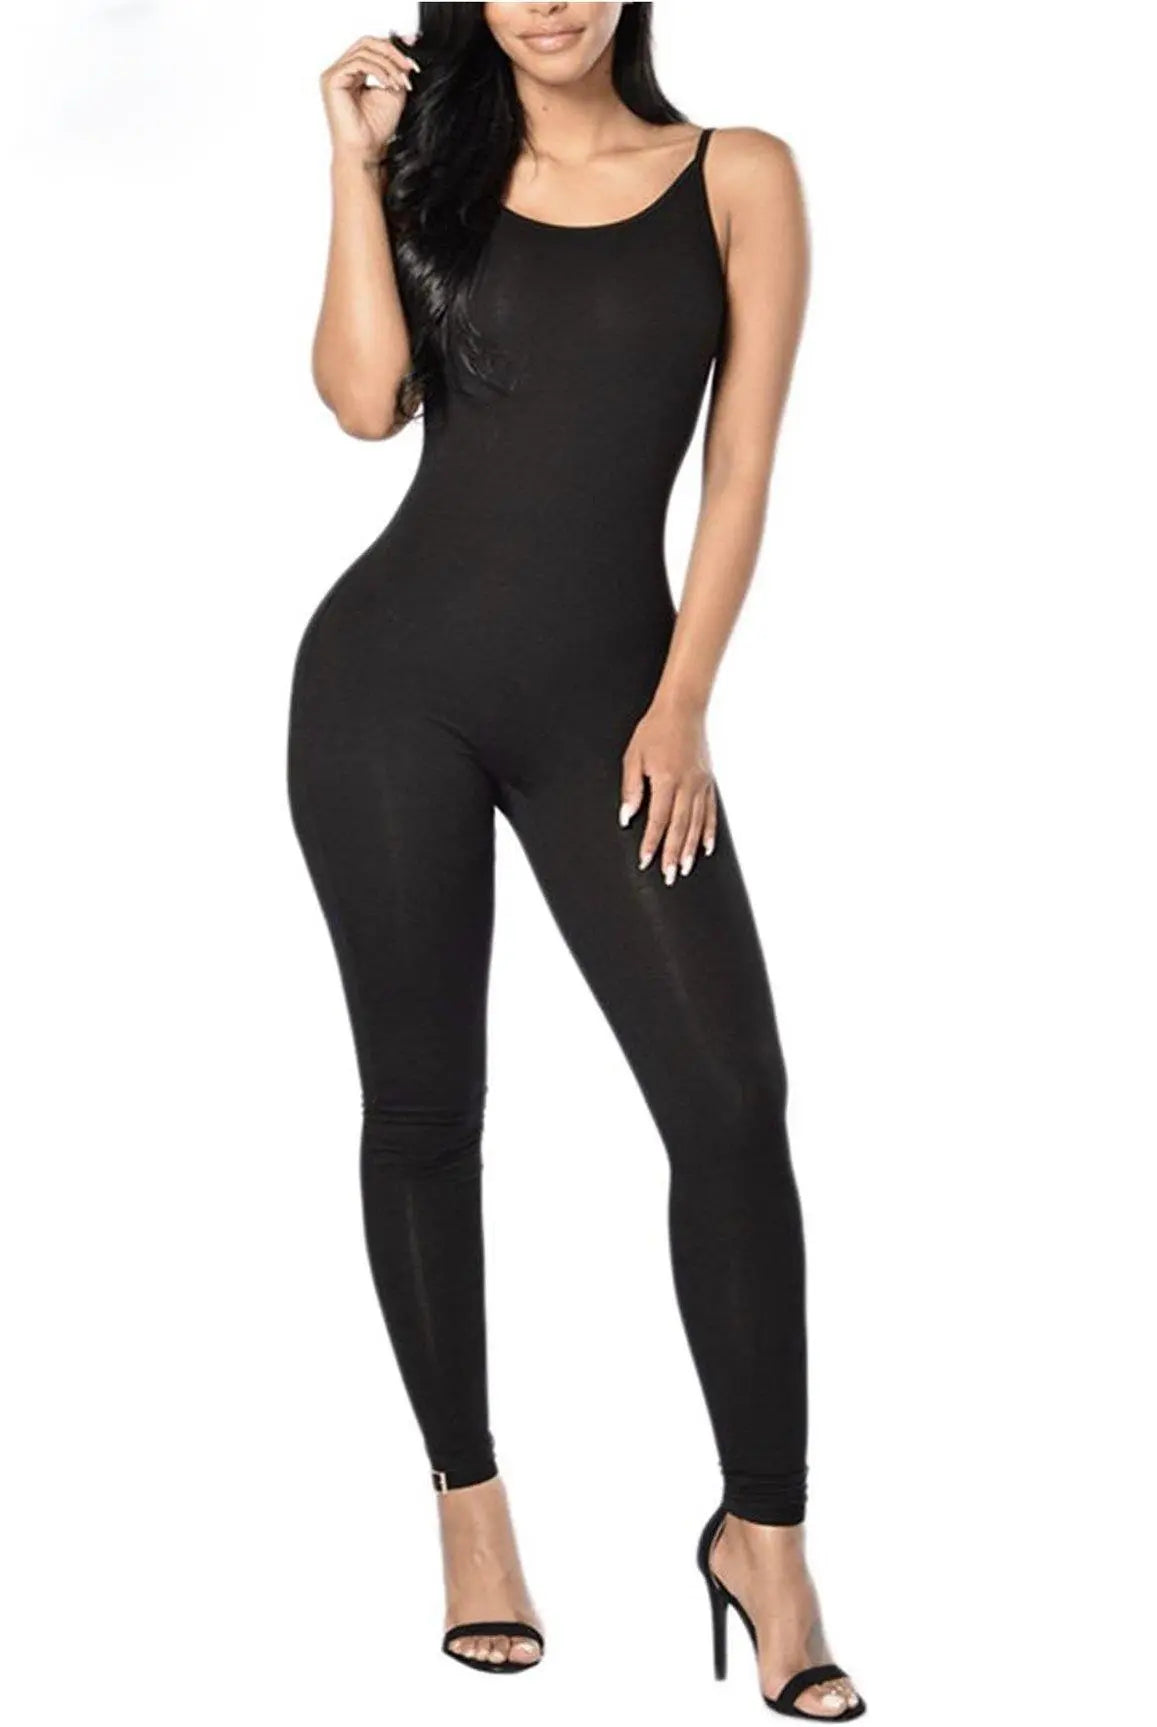 Get Up & Go Spaghetti Strap Body Con Jumpsuit | Swagg Boutique LLC.